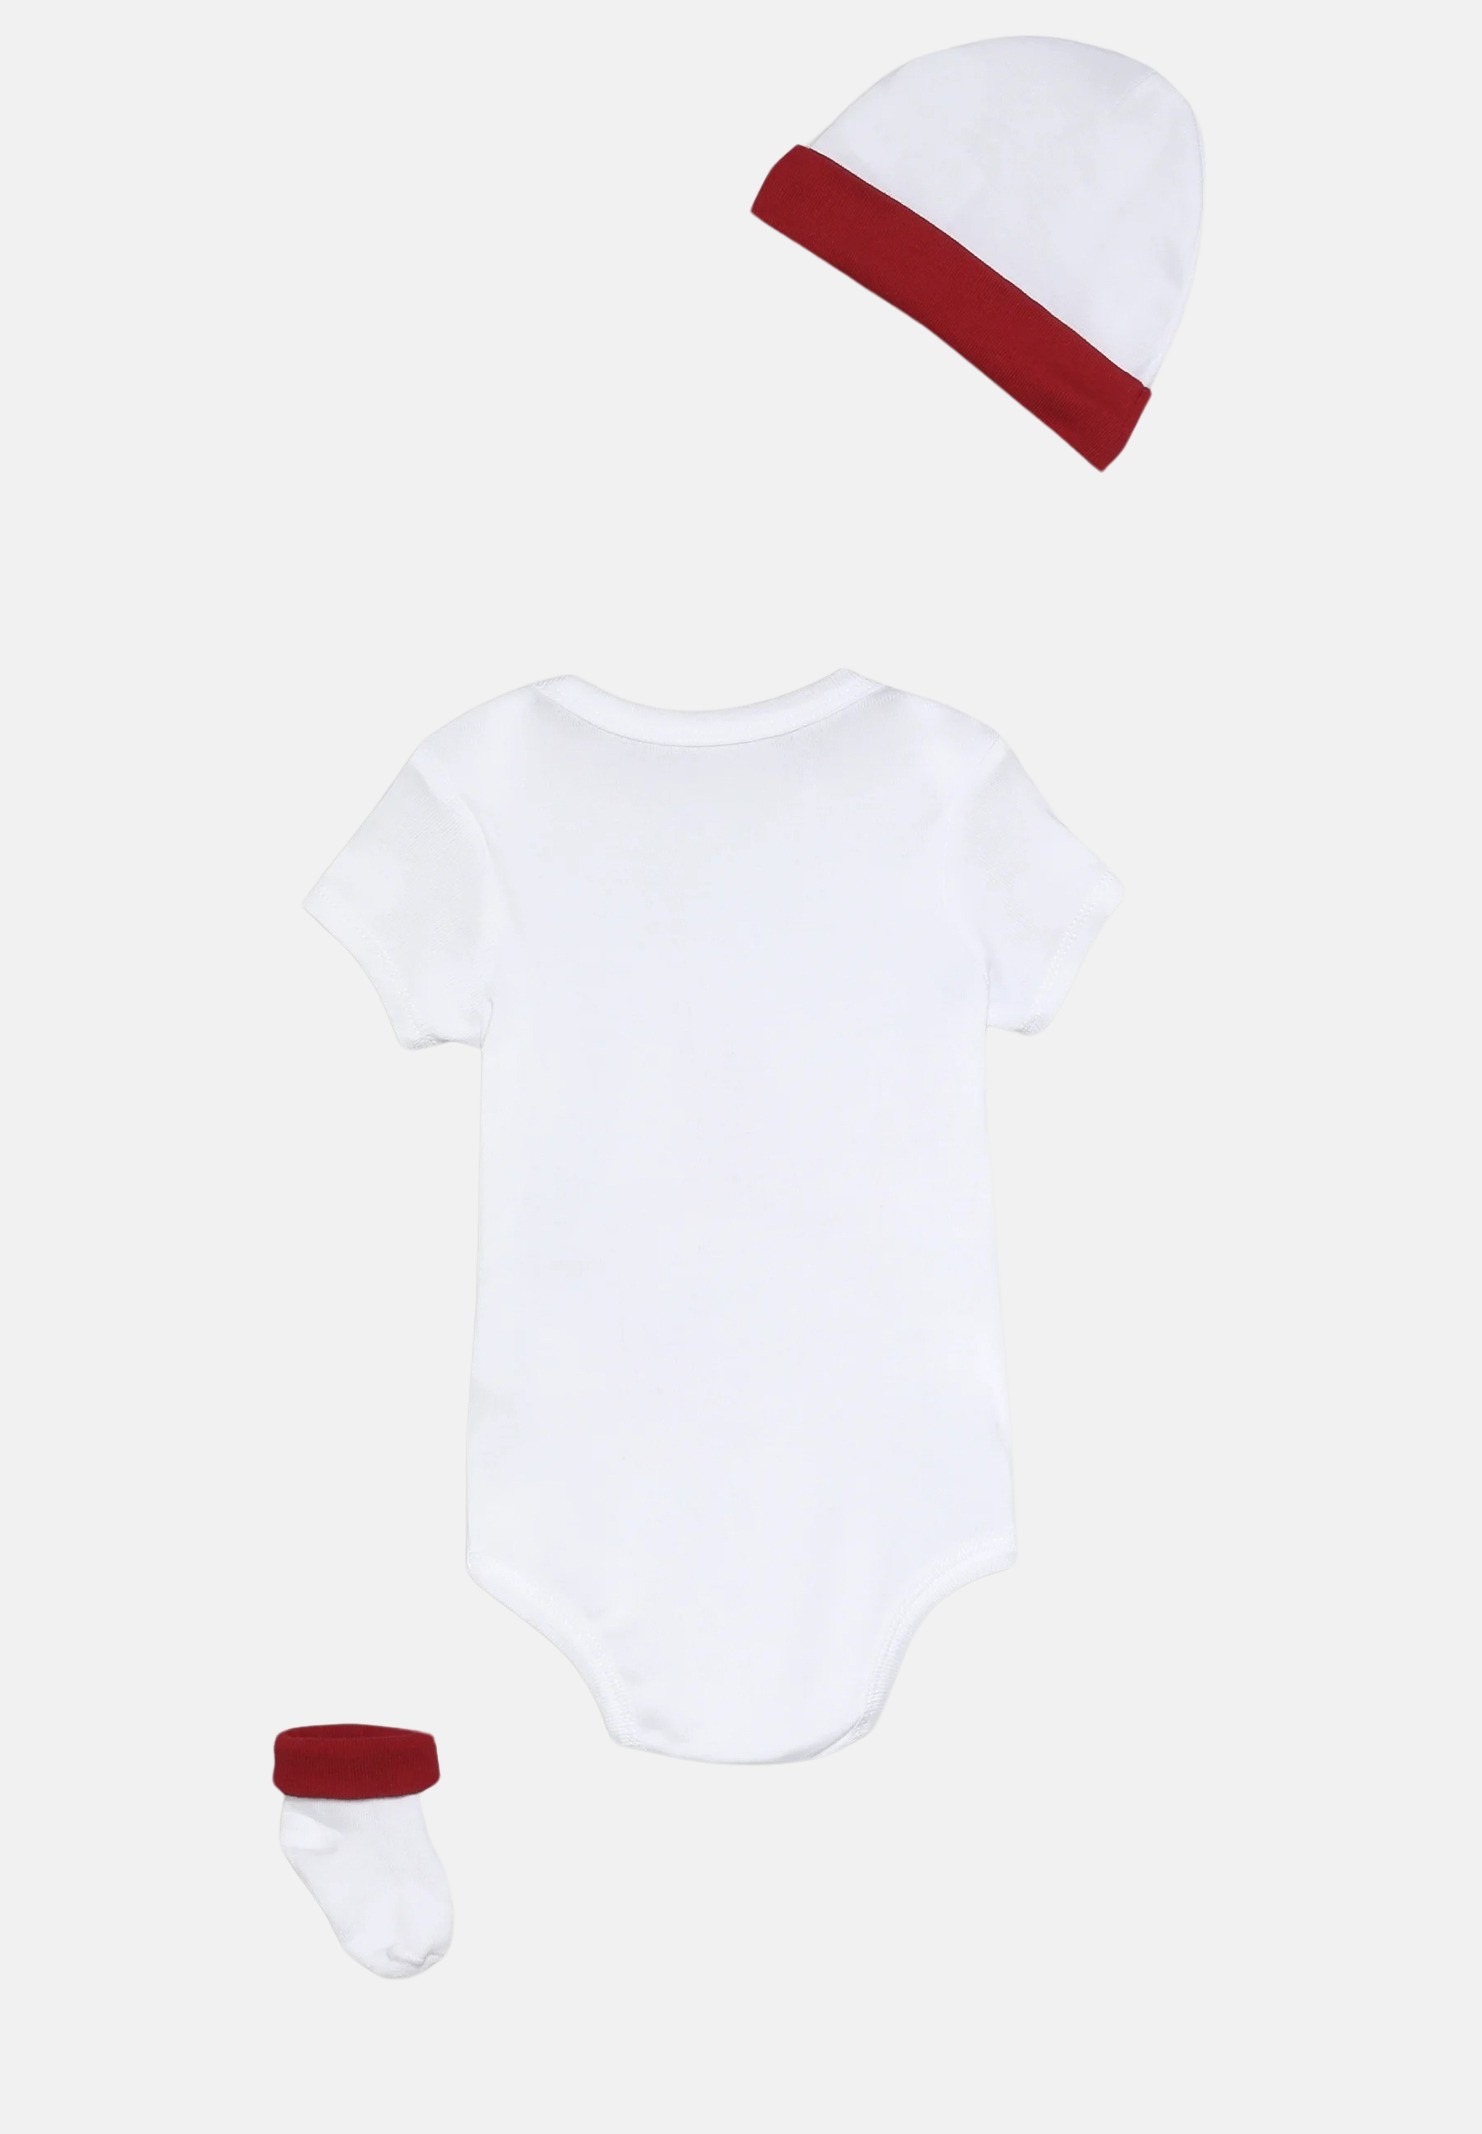 Completino neonato 3 pezzi Jordan bianco con contrasti rossi JORDAN | LJ0041RW3